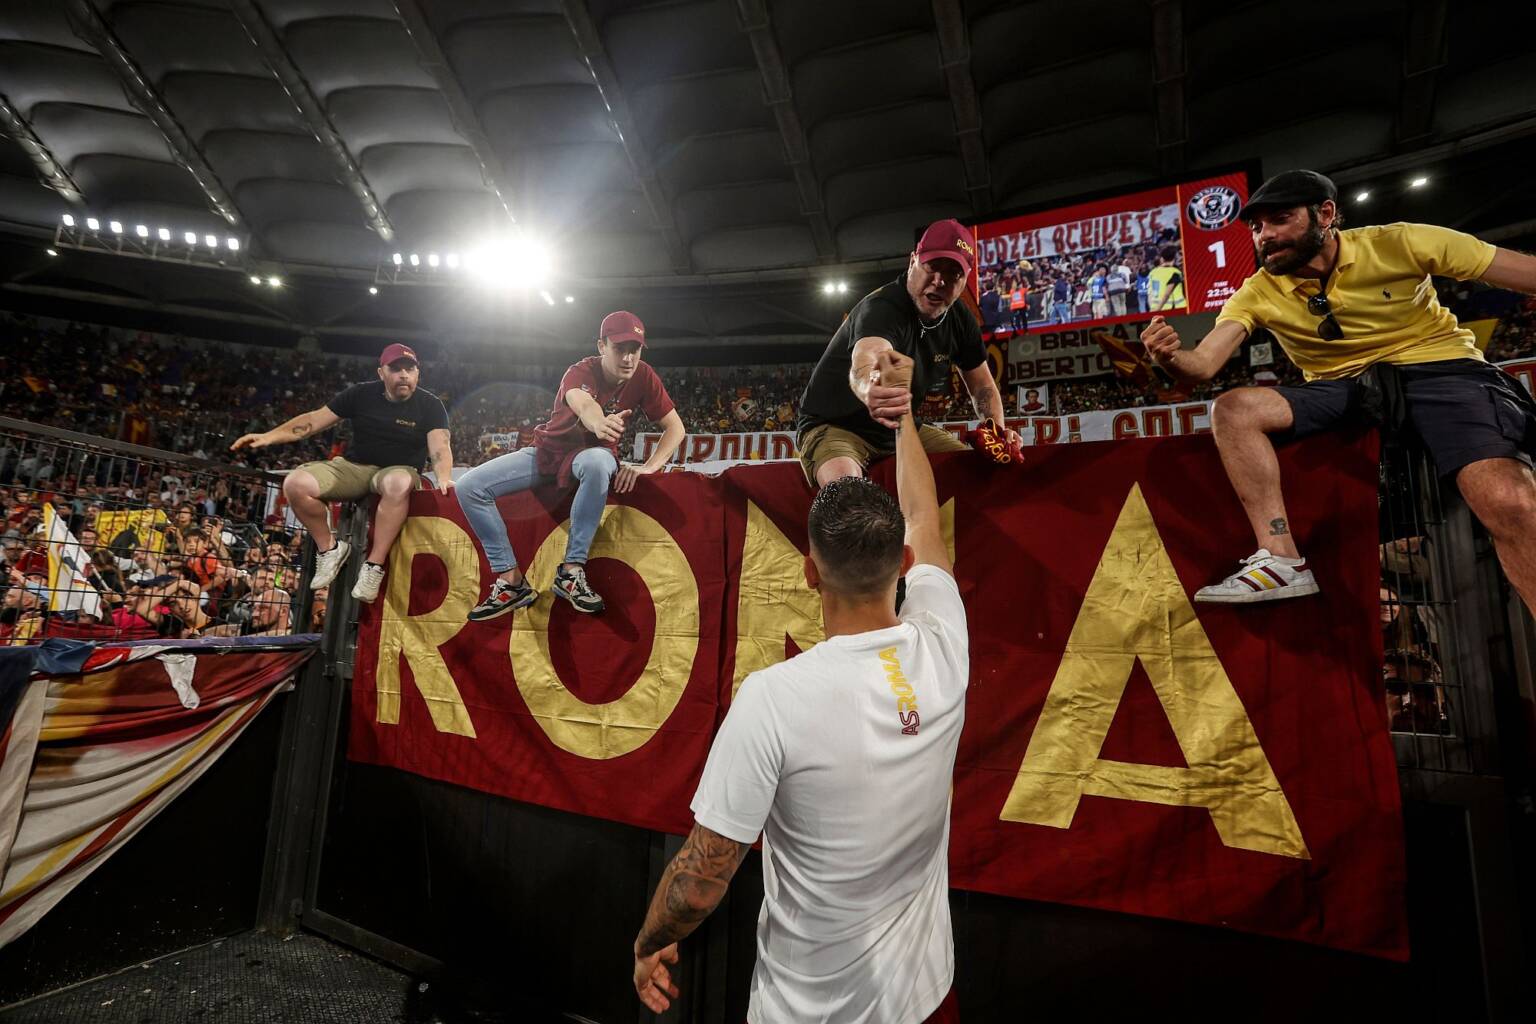 Roma Europa League (Shutterstock)